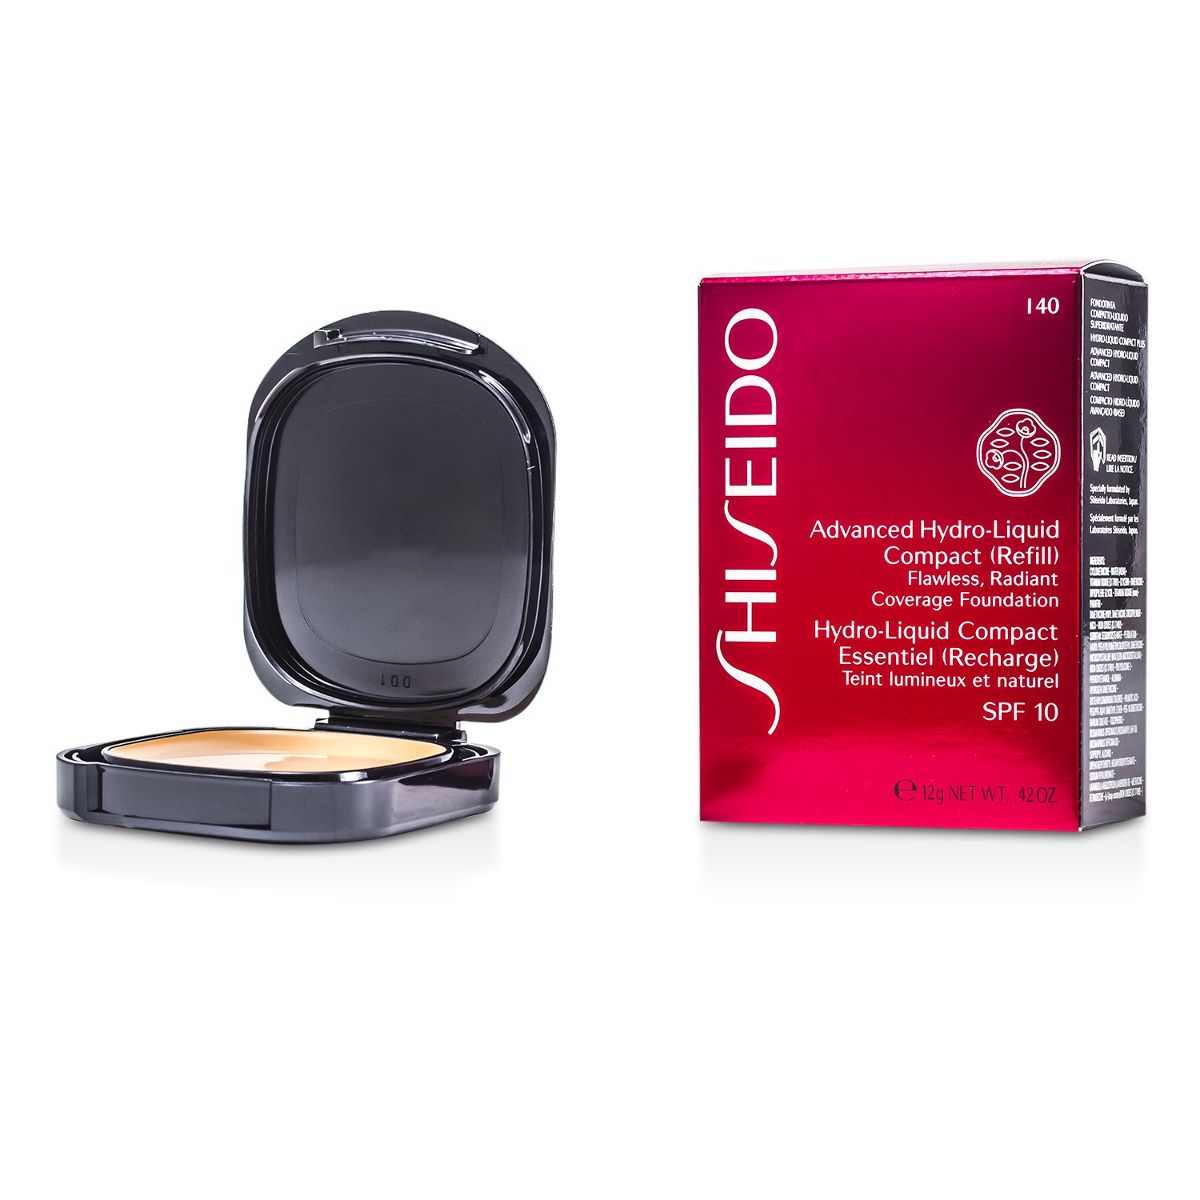 Advanced Hydro Liquid Compact Foundation SPF10 Refill - I40 Natural Fair Ivory Shiseido Image